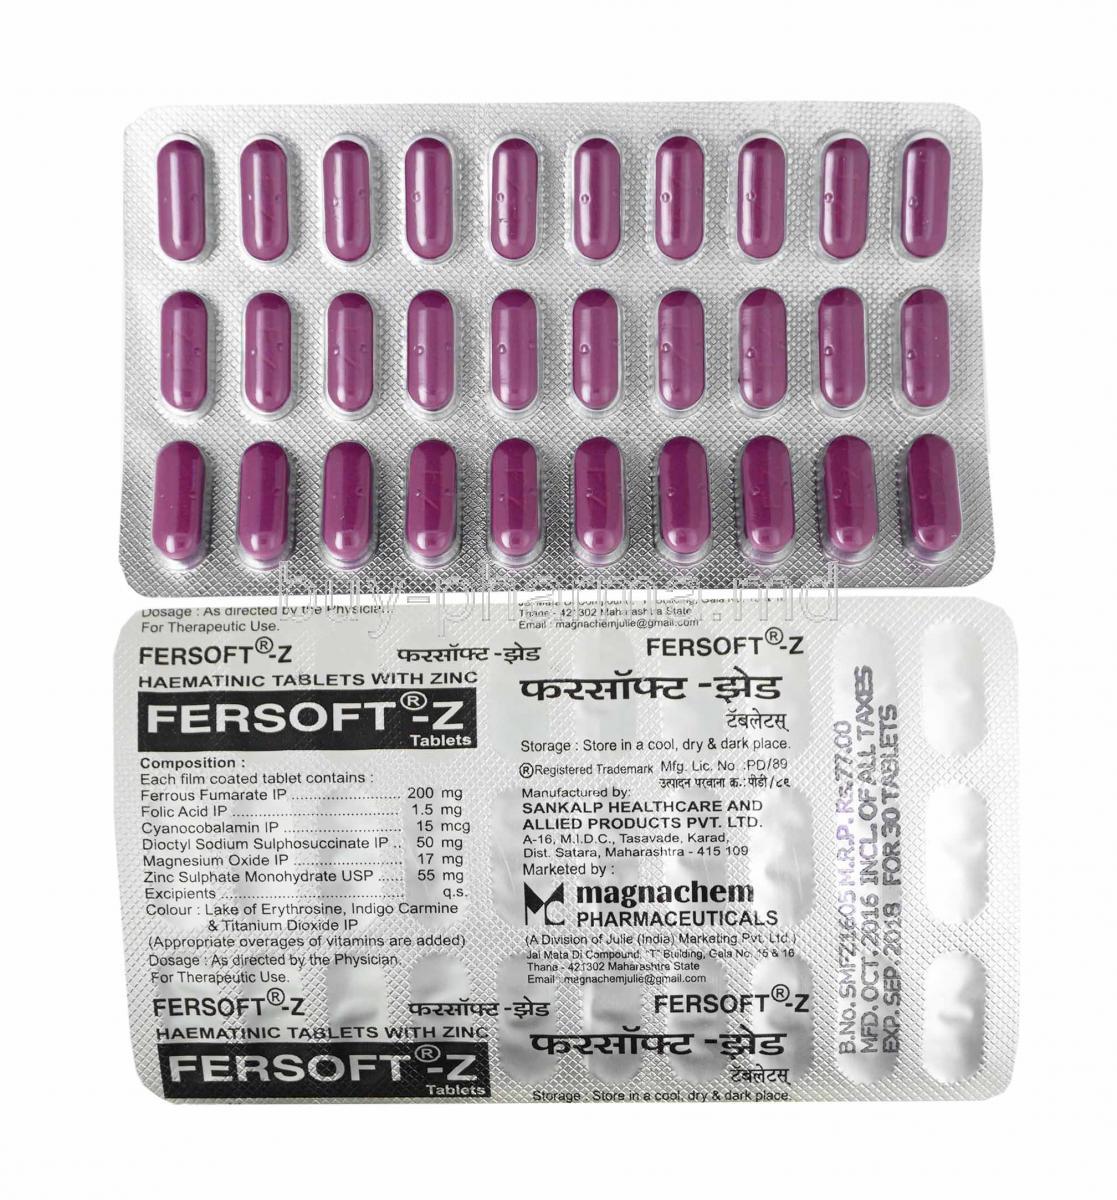 Fersoft-Z capsules